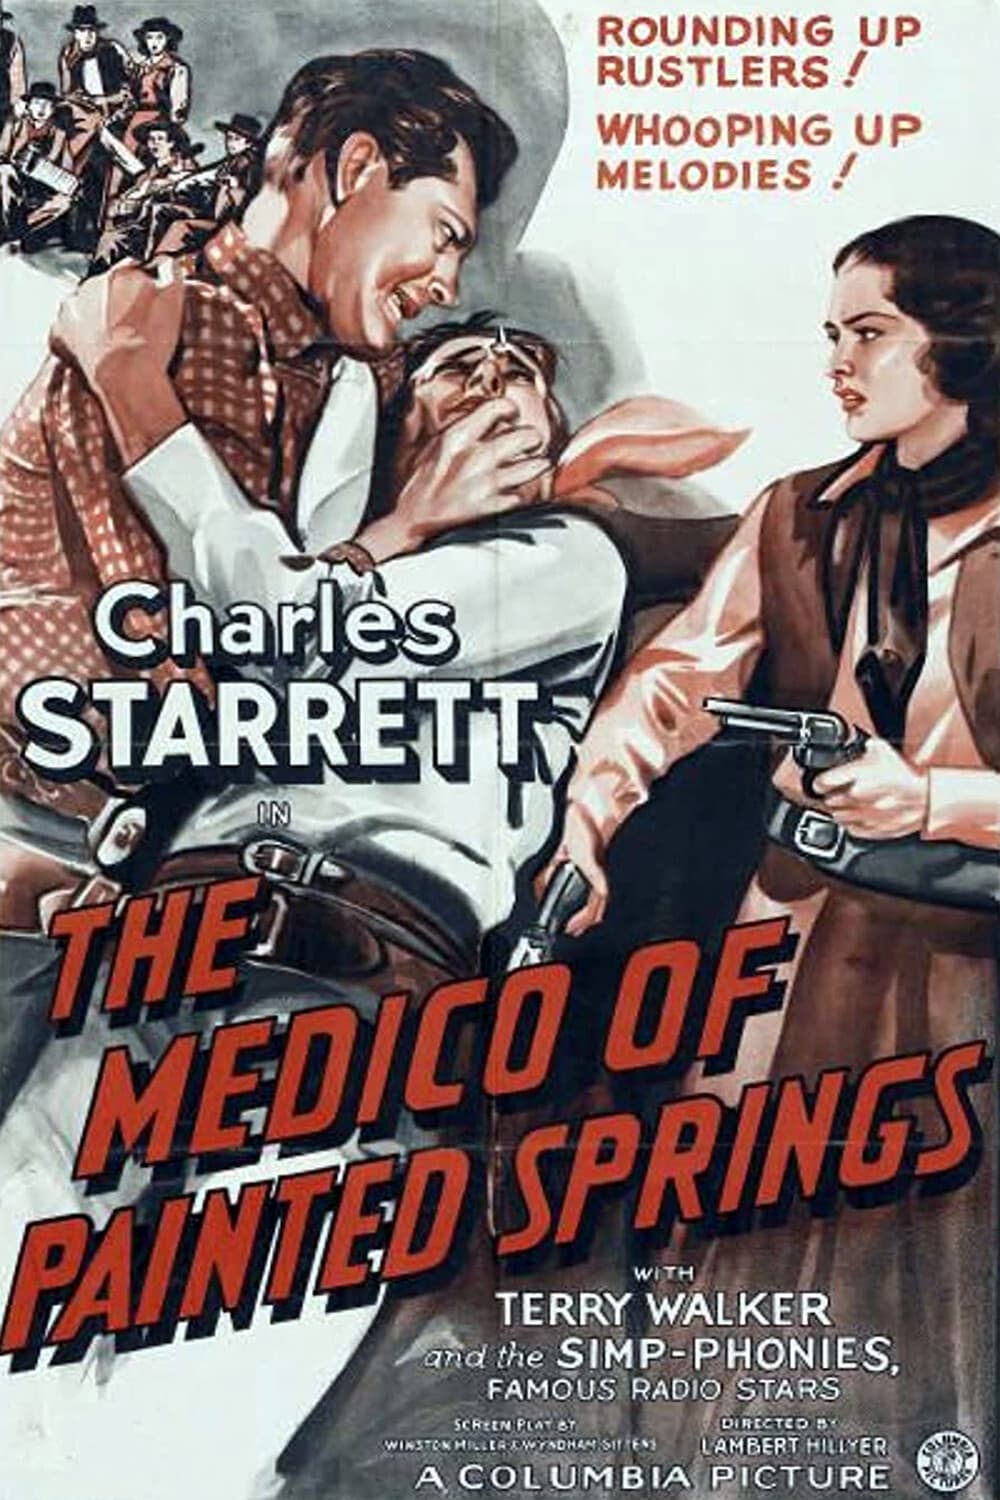 The Medico of Painted Springs (1941)